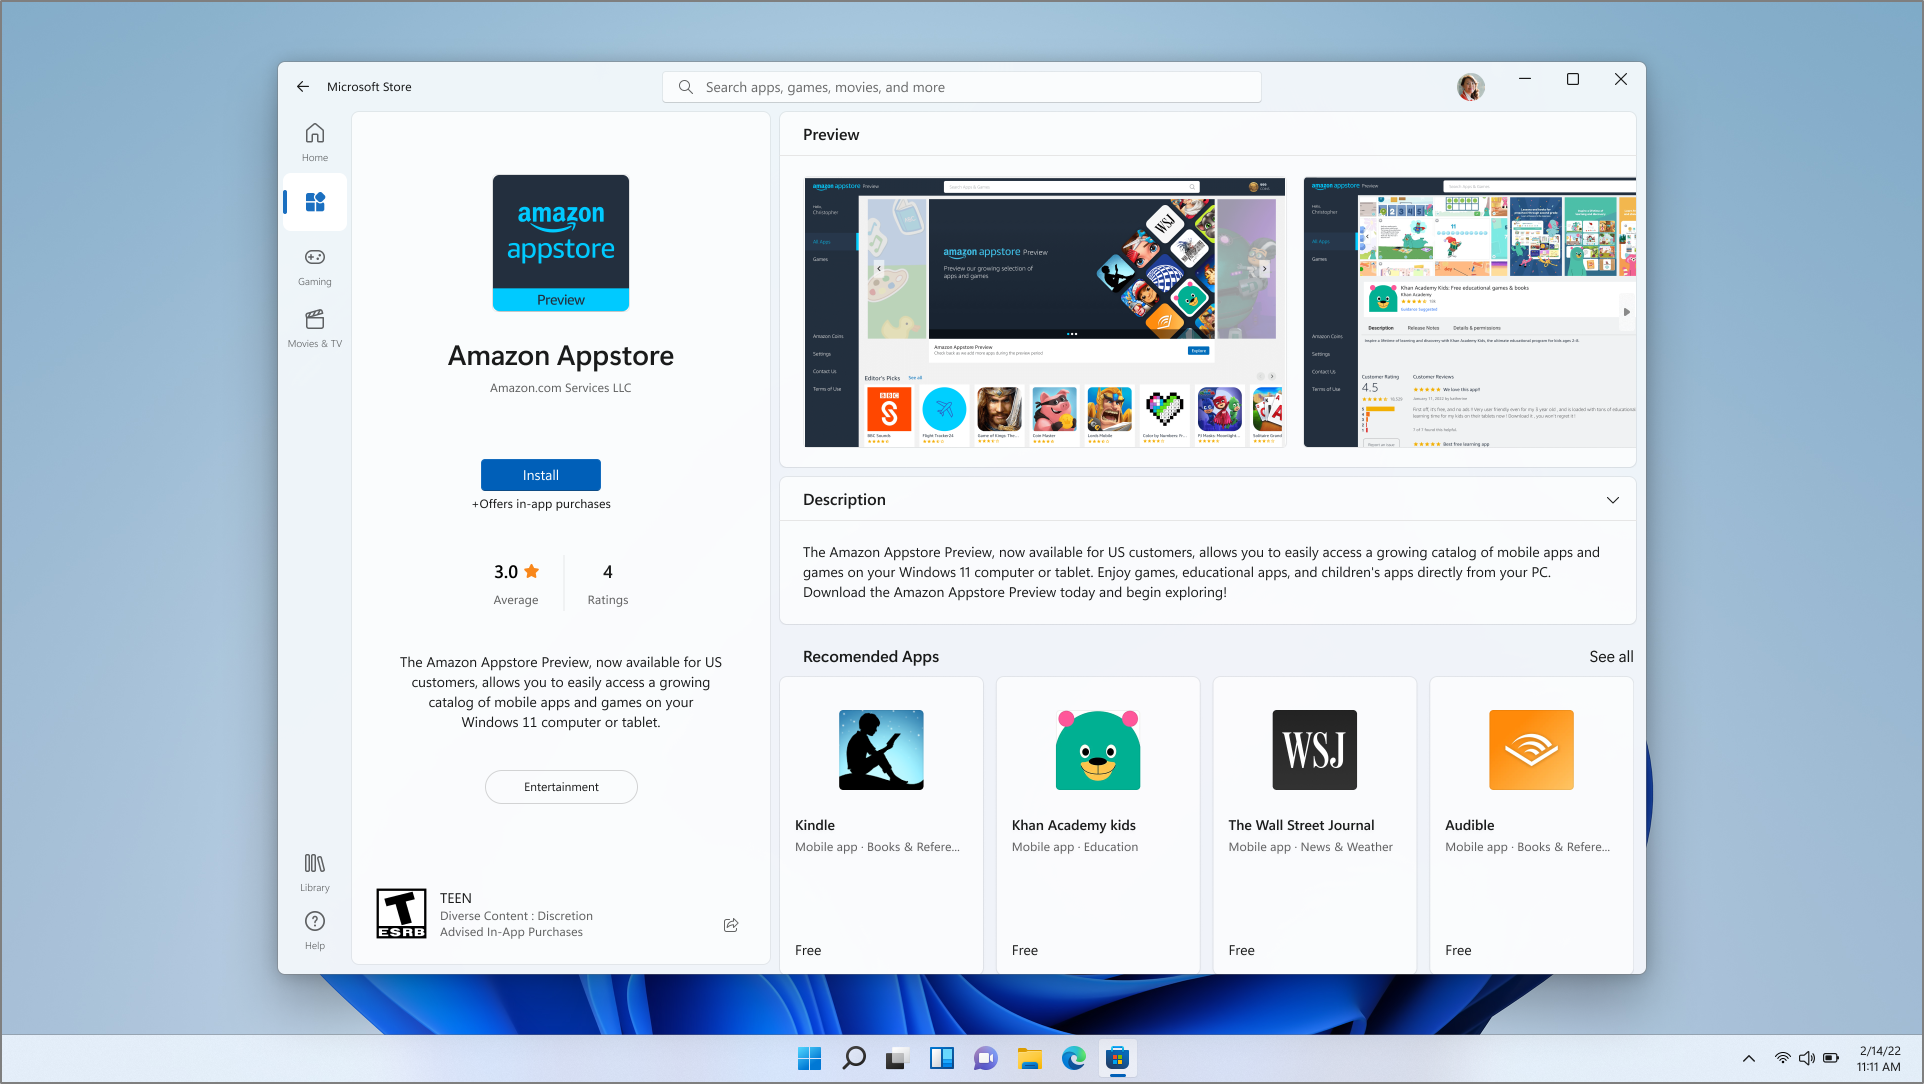 Microsoft Store 应用中Amazon Appstore下载页面的屏幕截图。